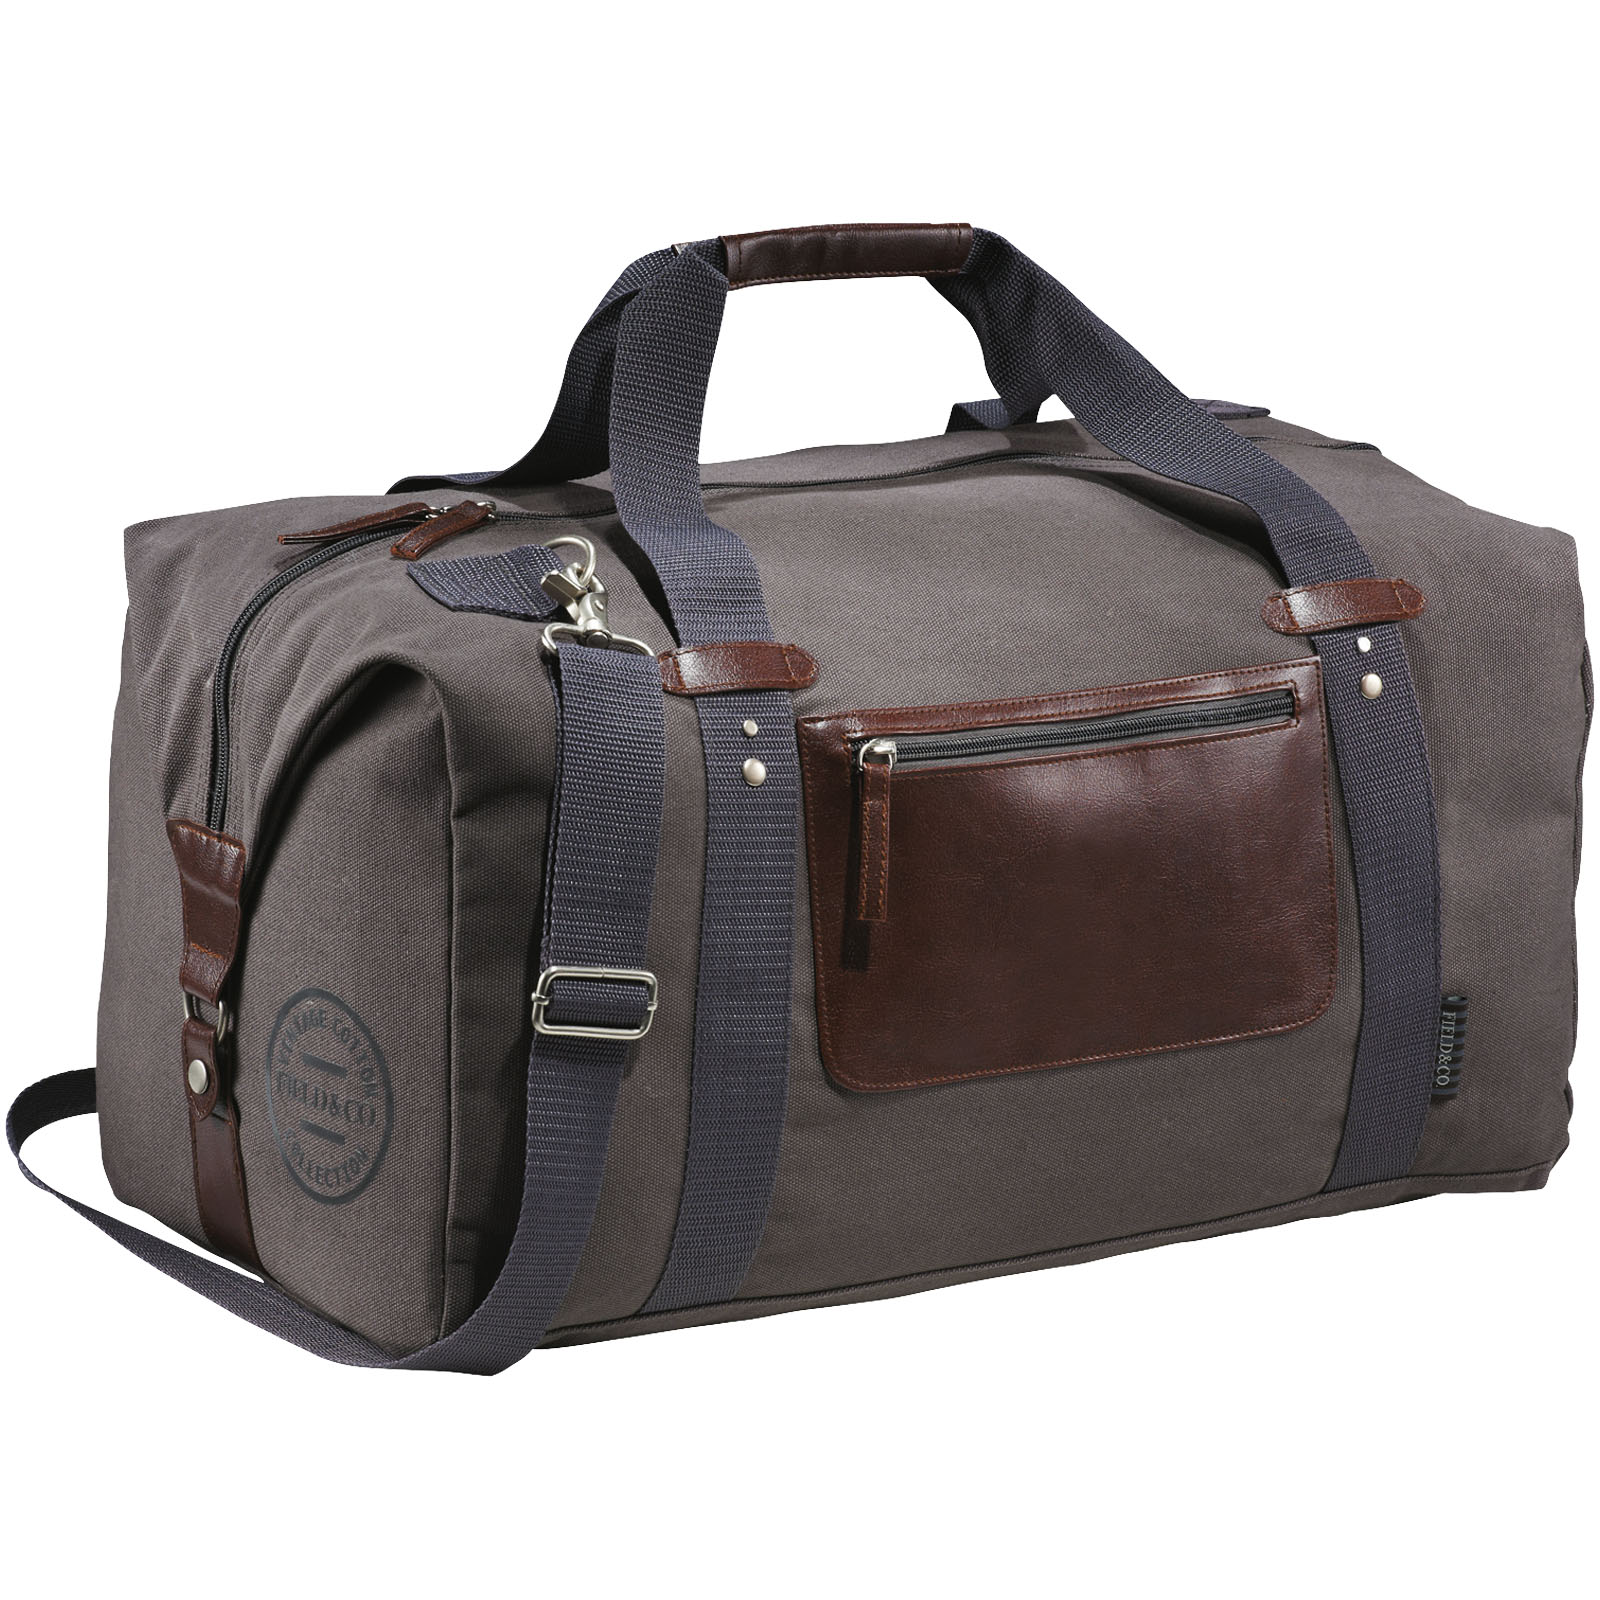 Stylish cotton canvas travel bag JUGS - brown